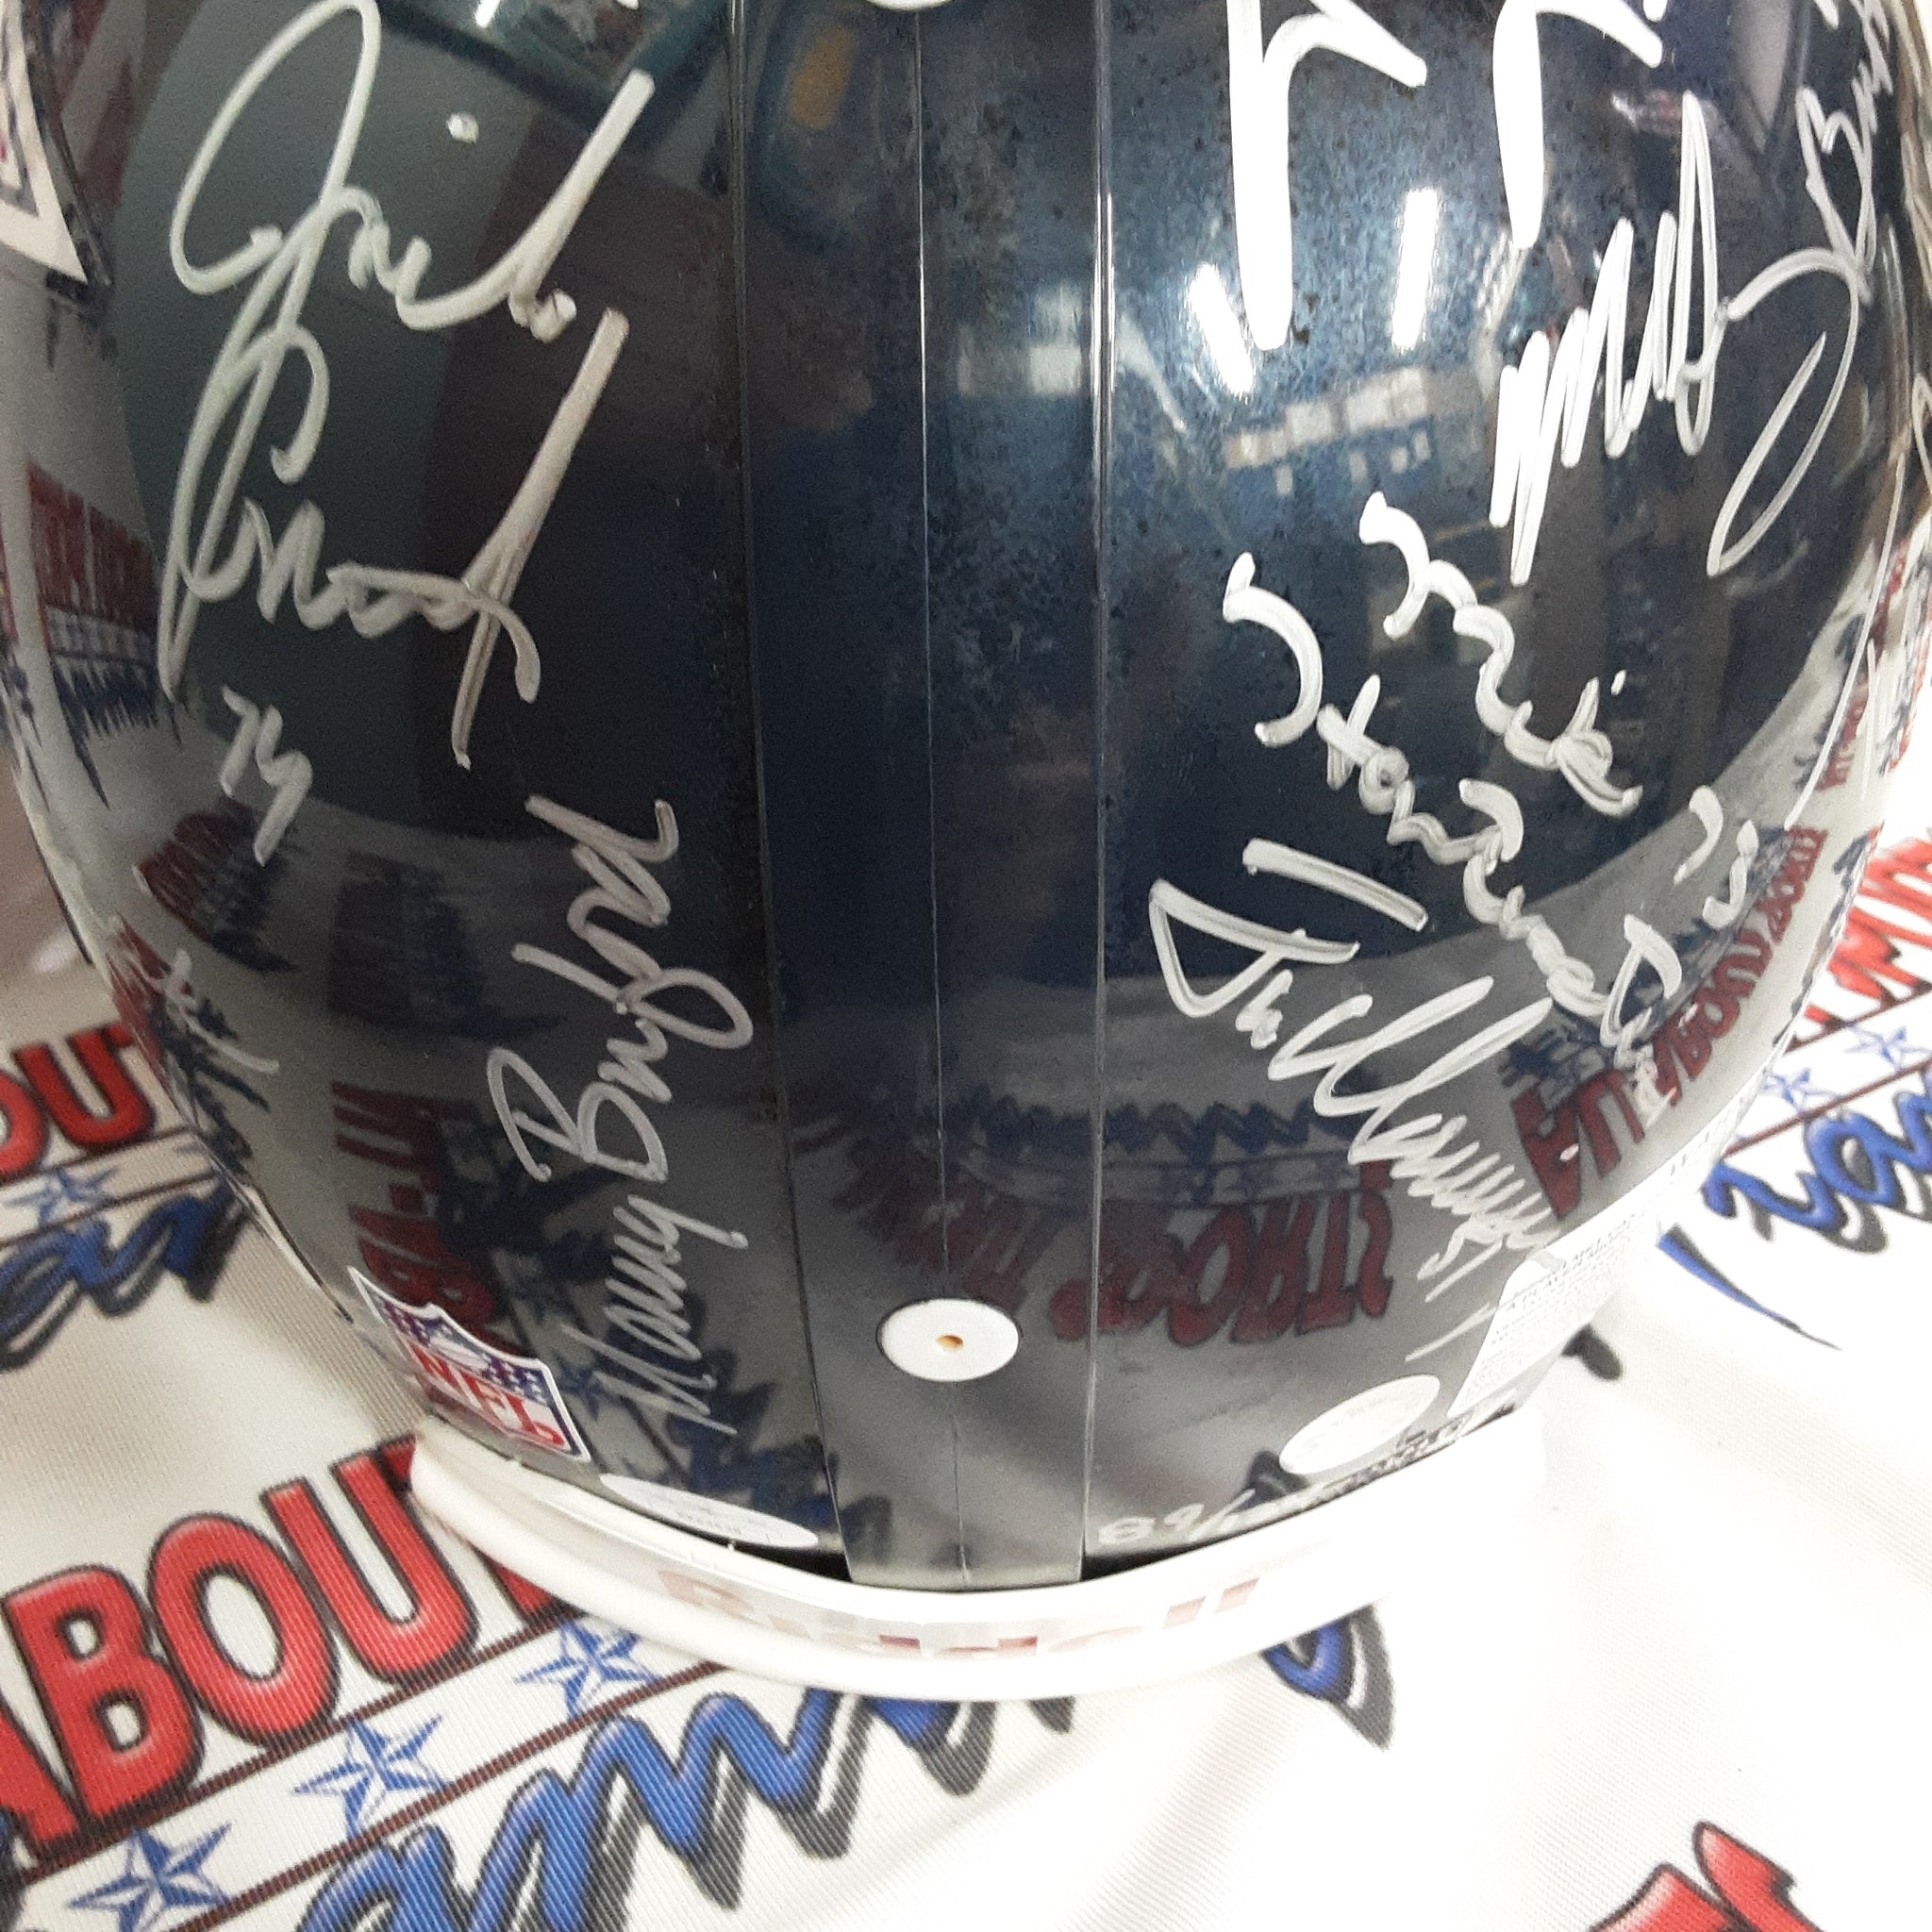 1985 Super Bowl XX Champions Reunion Team Signed Autographed Full-size Authentic Helmet JSA/LOA